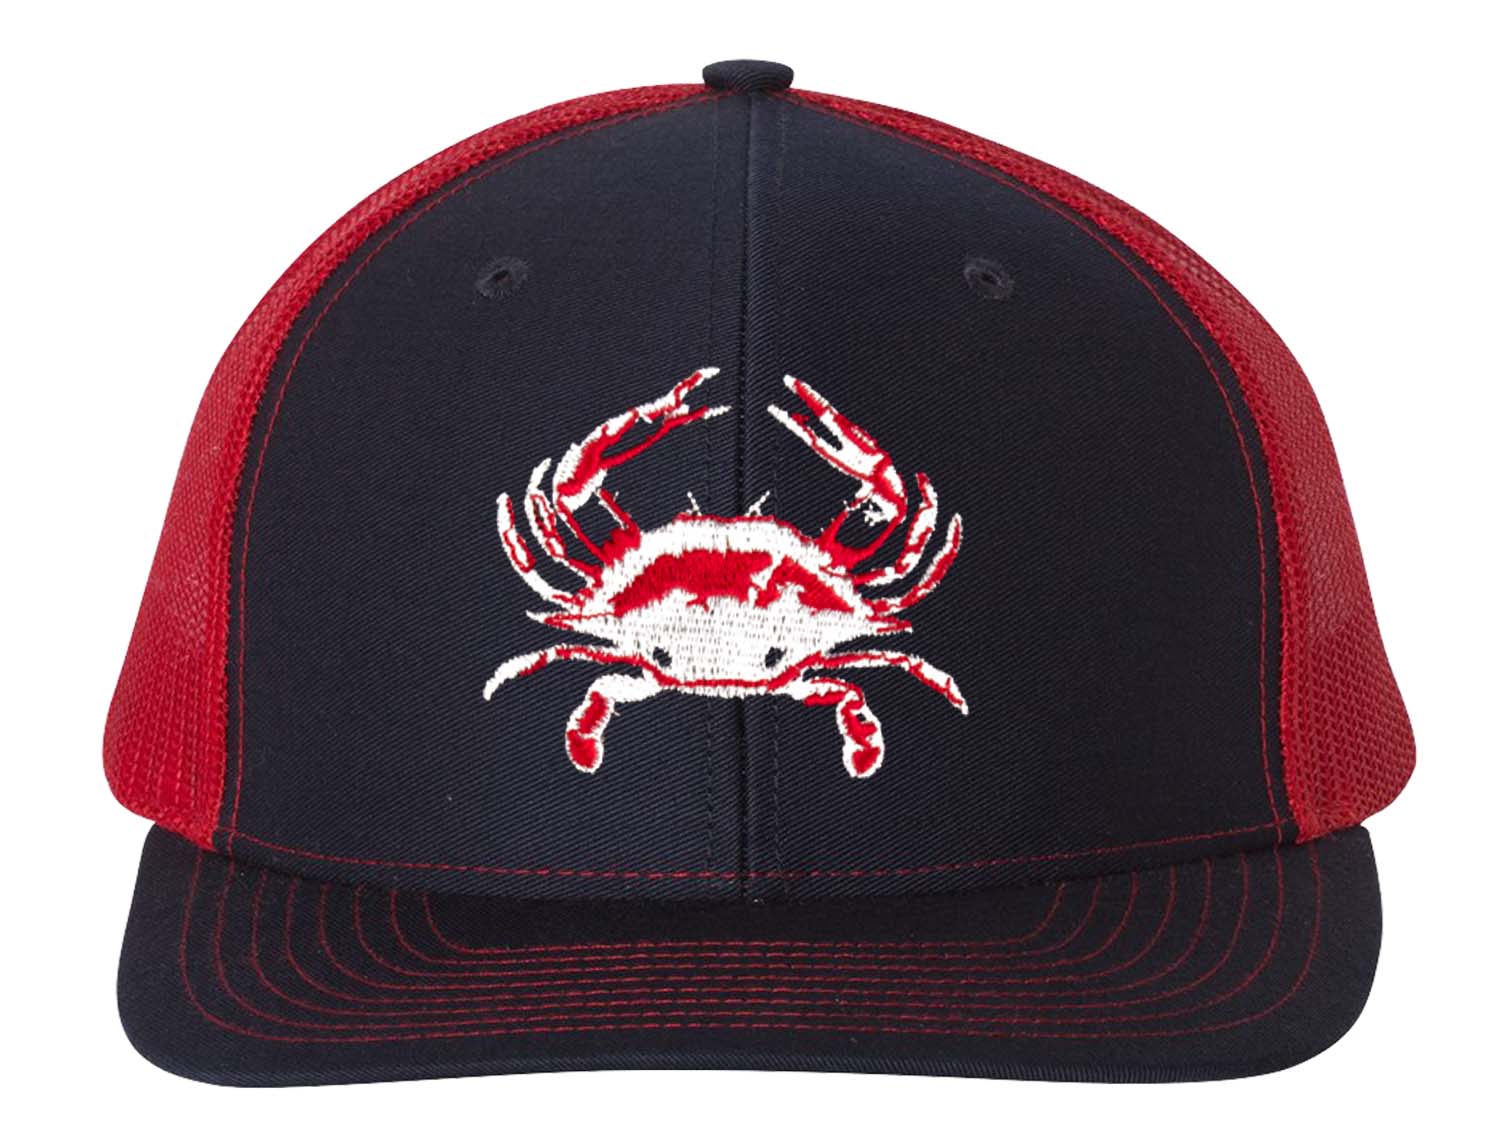 Blue Crab "Reel Crabby" Structured Trucker Hat - Navy/Red Mesh